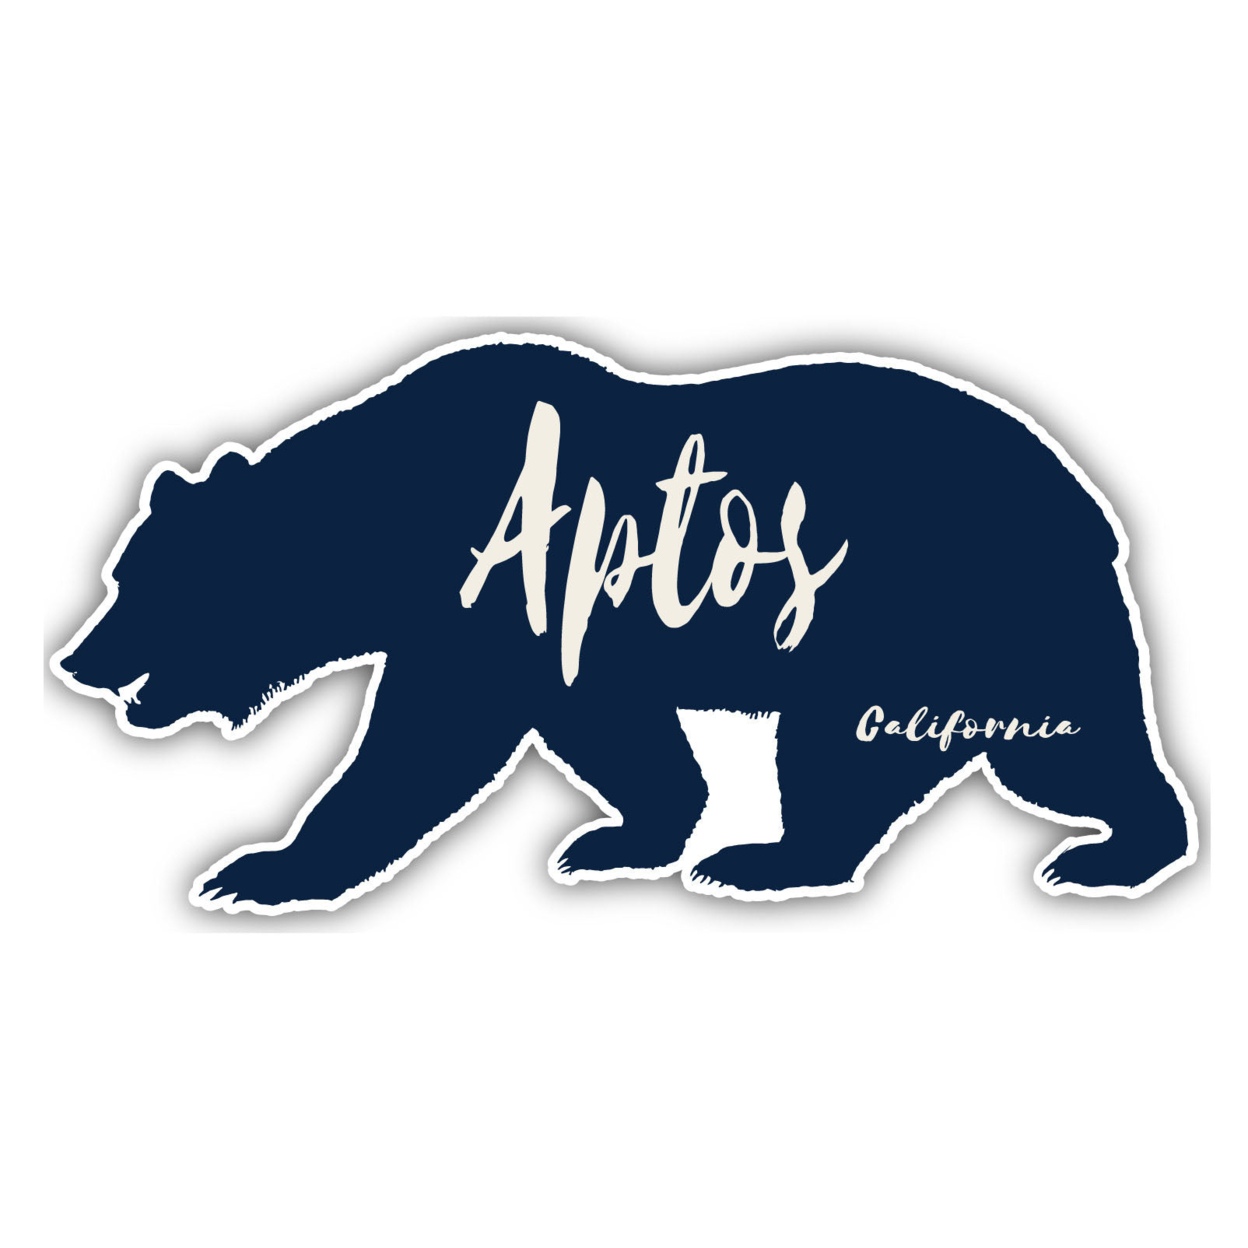 Aptos California Souvenir Decorative Stickers (Choose Theme And Size) - 4-Pack, 2-Inch, Adventures Awaits